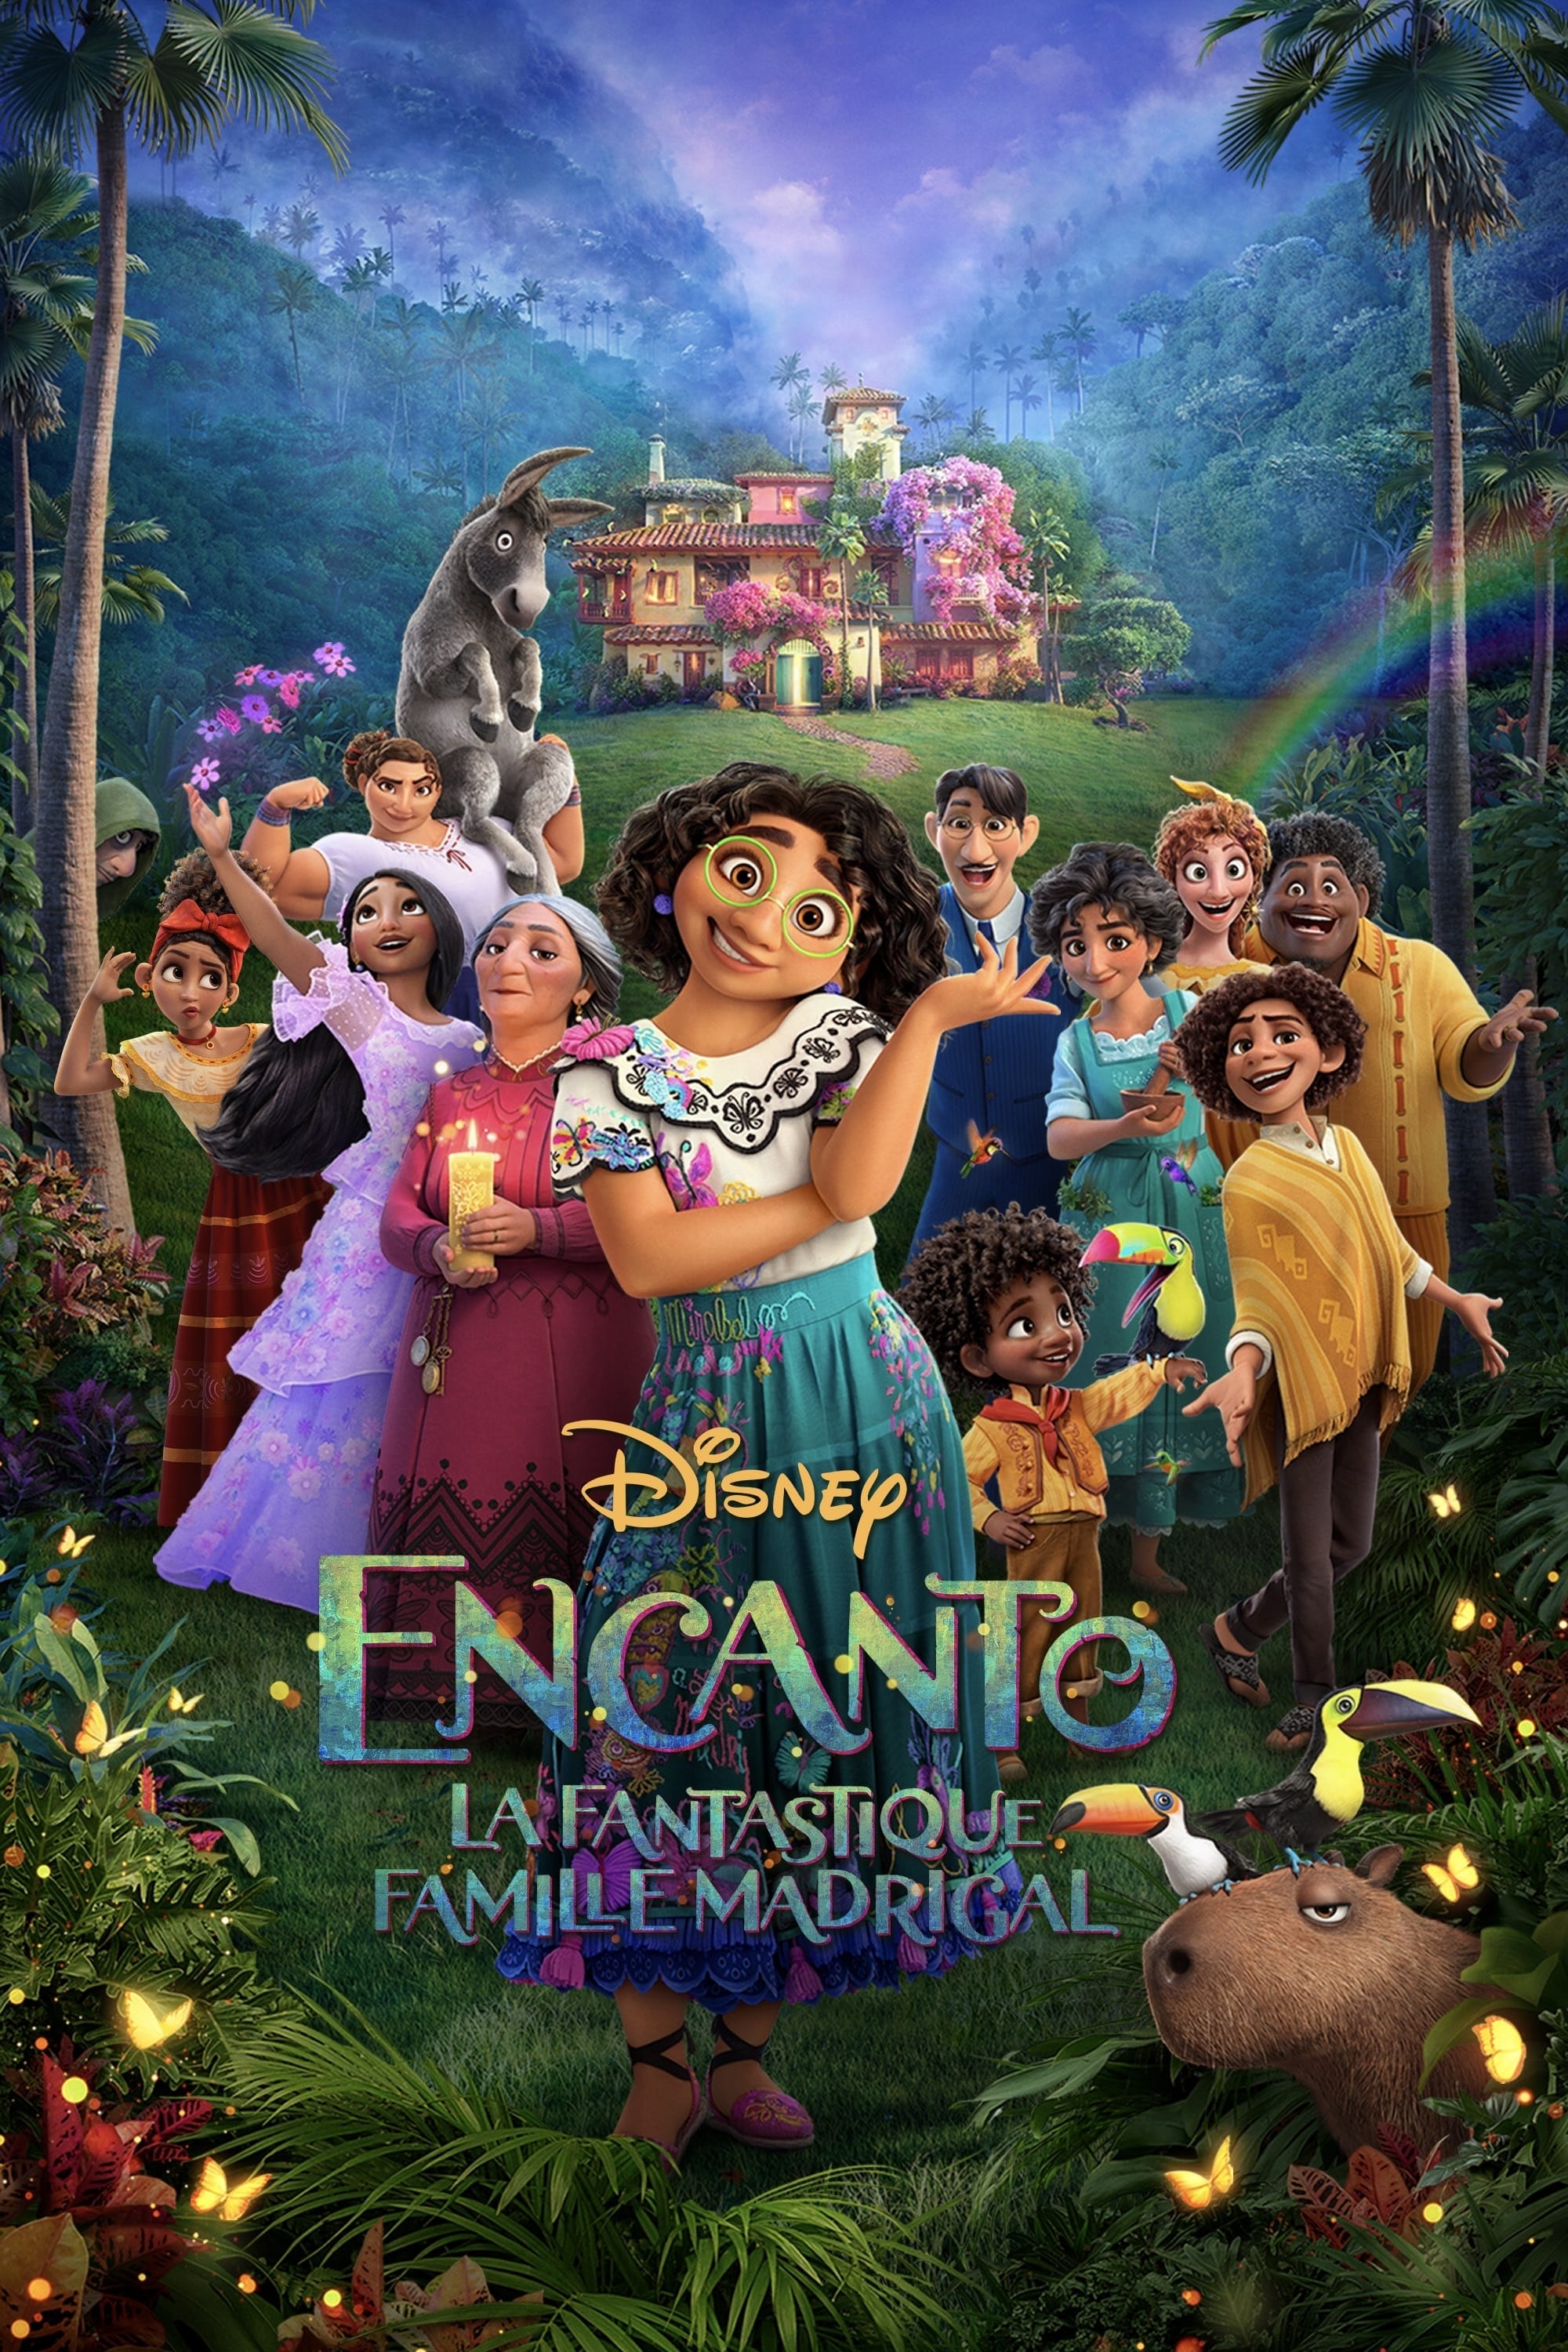 Affiche du film "Encanto, la fantastique famille Madrigal"